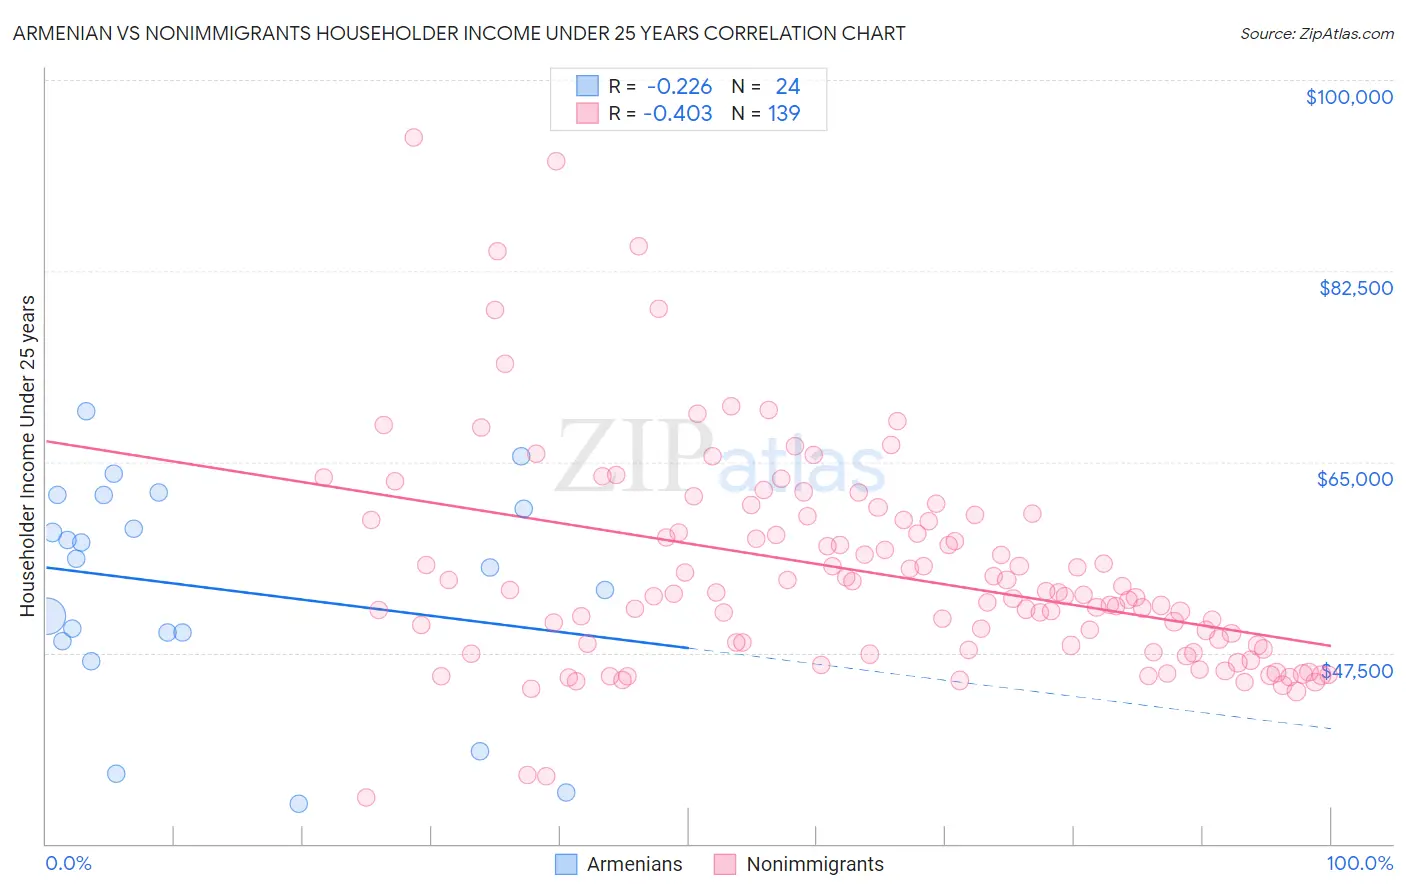 Armenian vs Nonimmigrants Householder Income Under 25 years